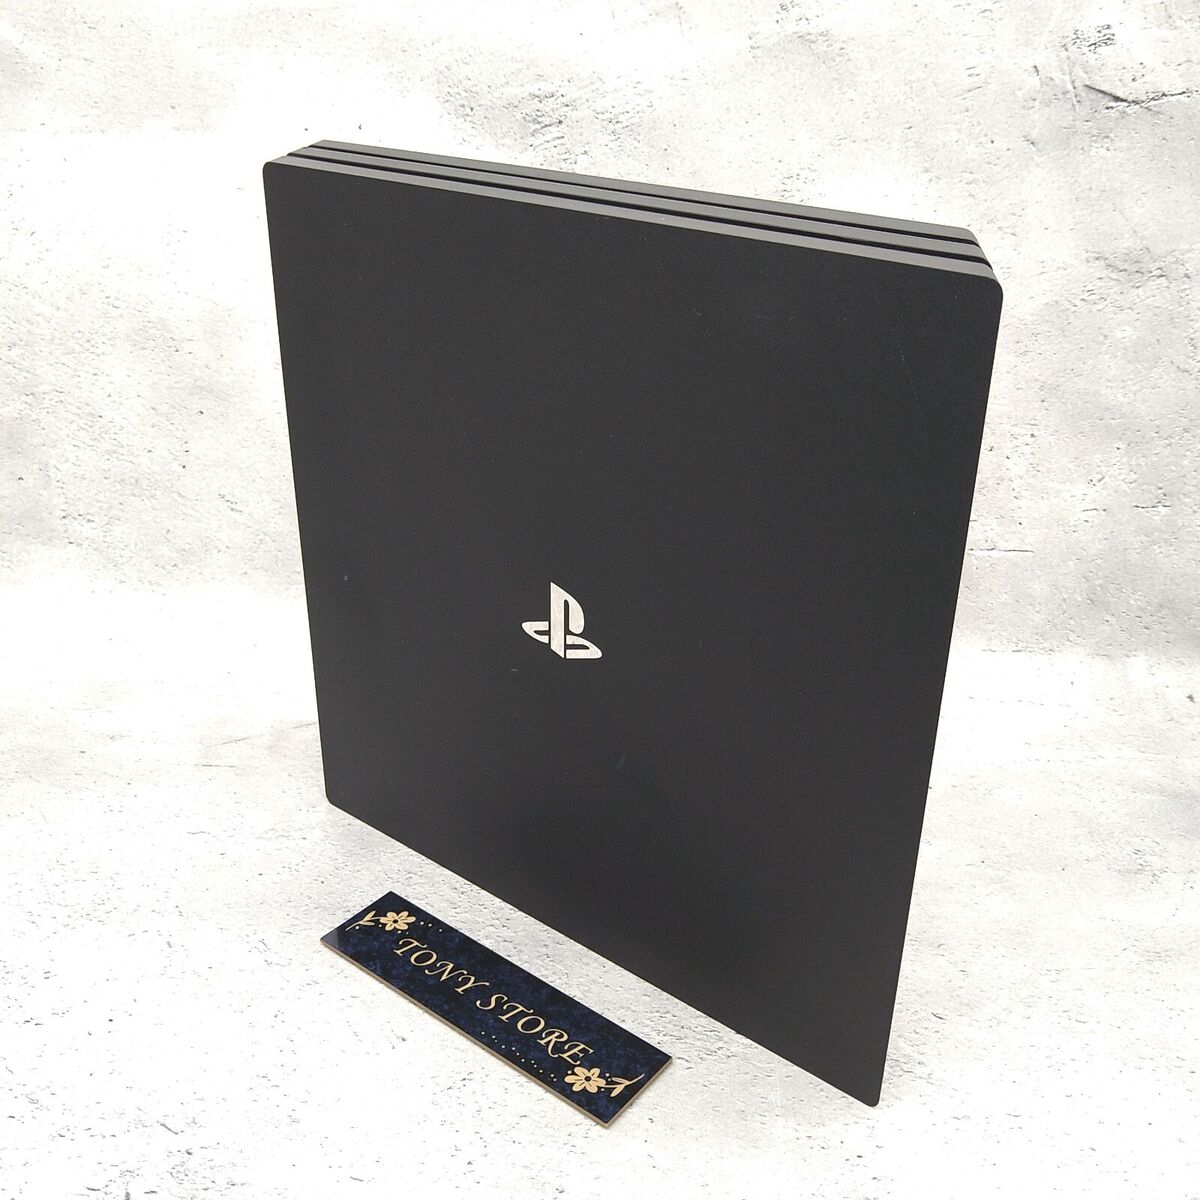 SONY PlayStation 4 Pro 1TB Black CUH-7200BB01 Console Japan Black